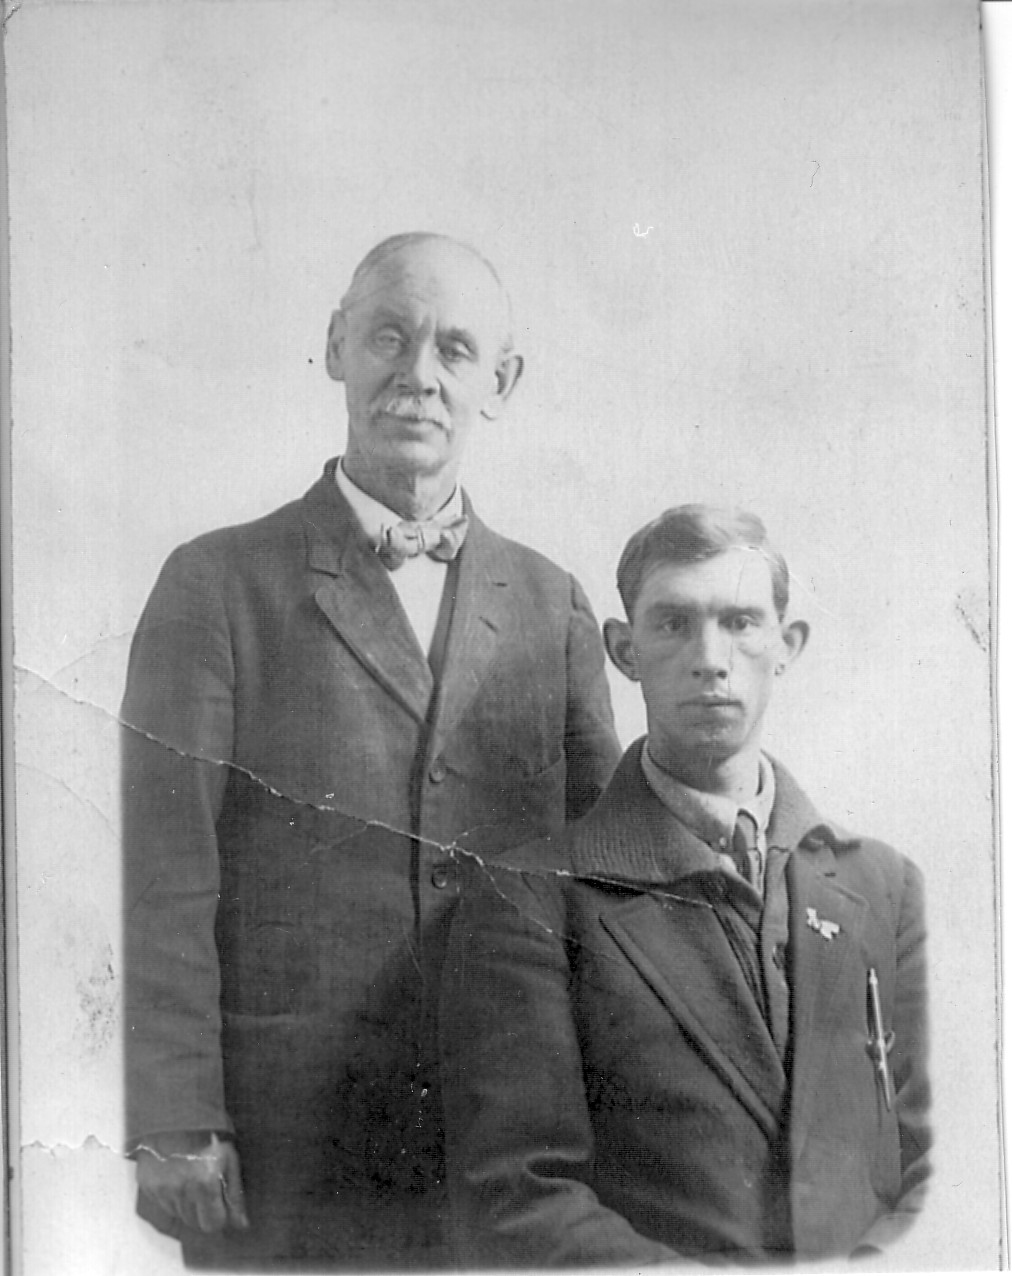 Mr. Jones and Harry Cummings